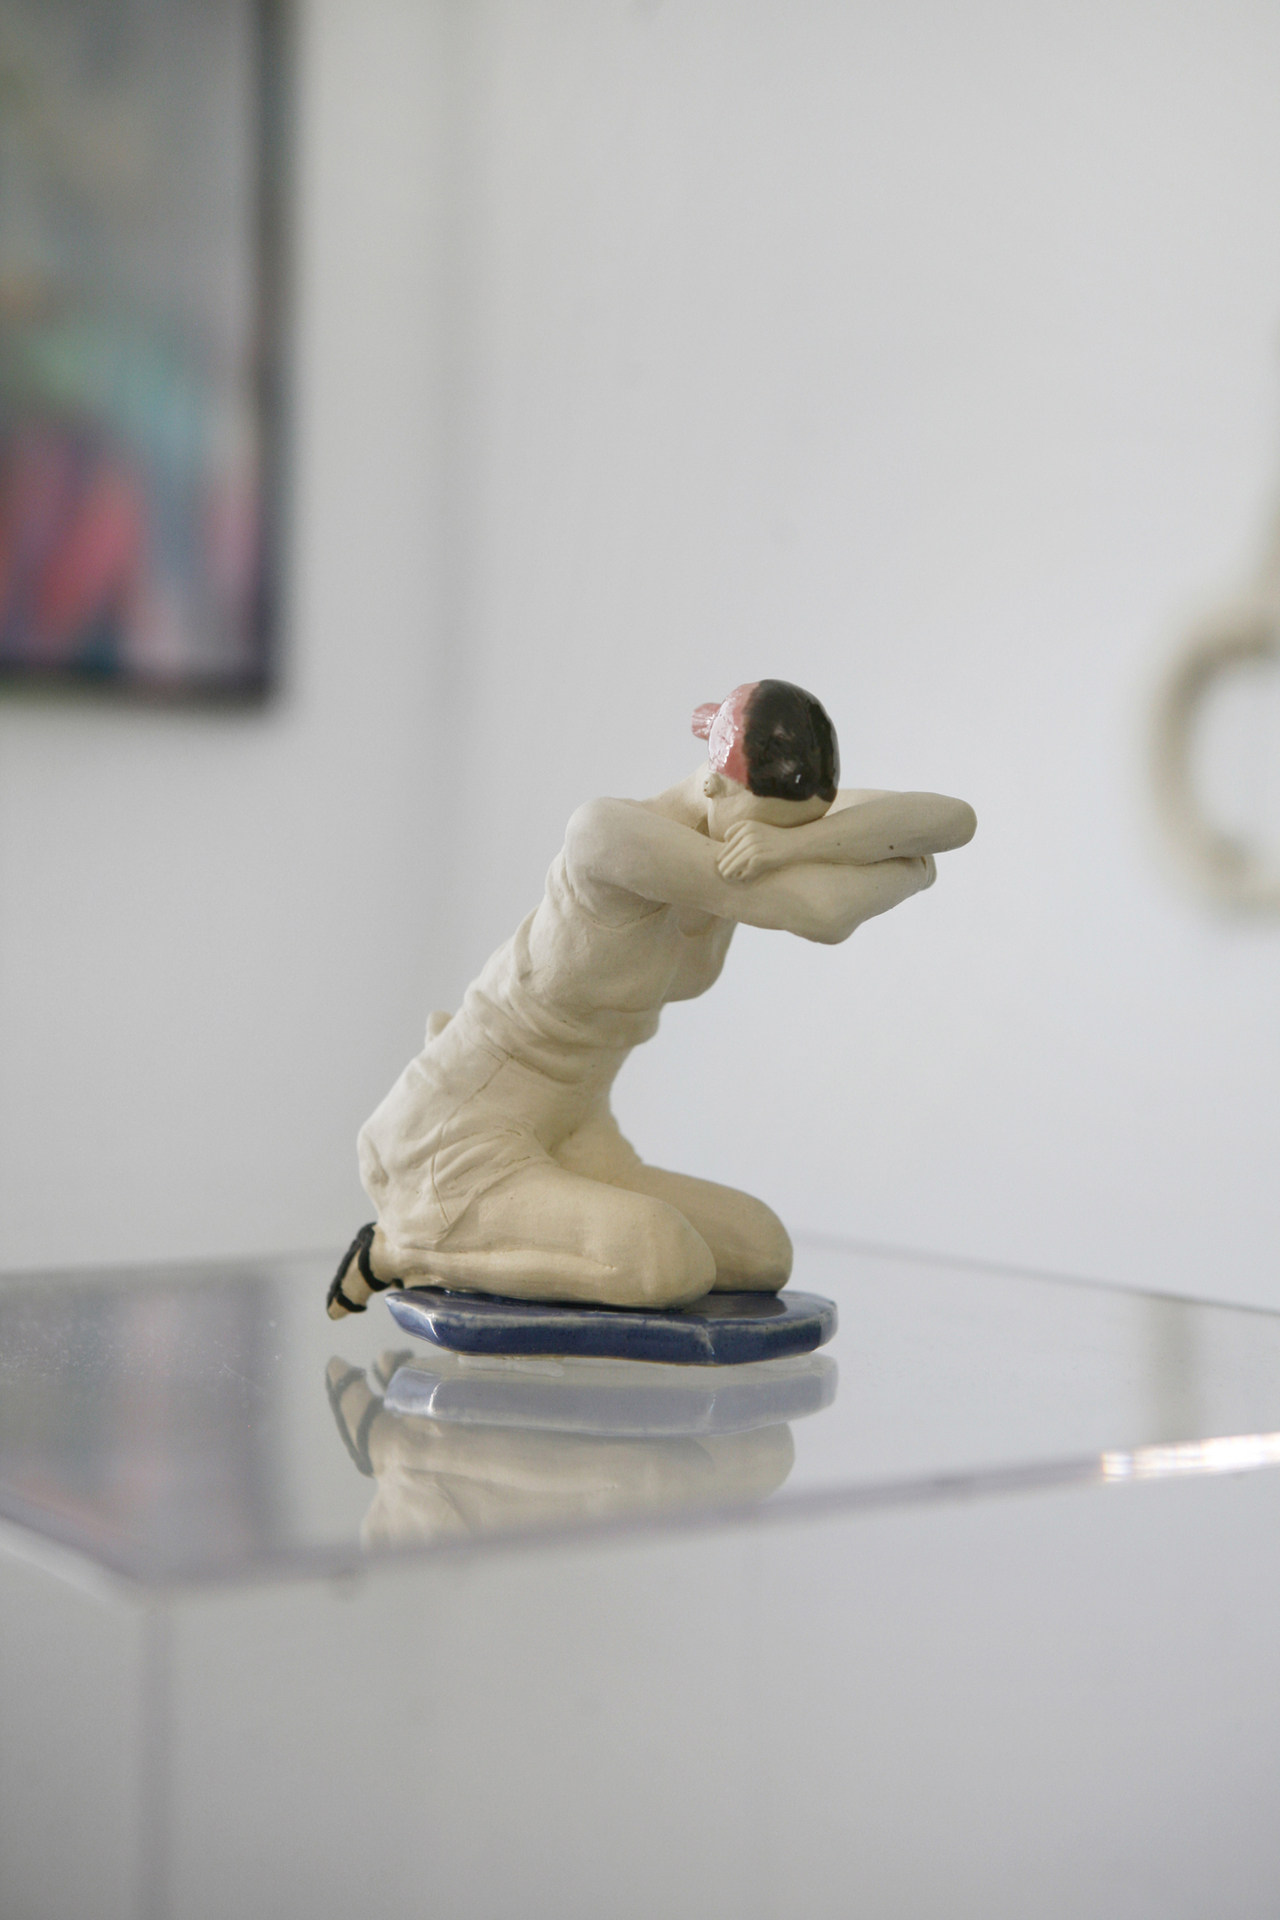 Siobhan Furnary, Crying Woman, 2021, Glazed ceramic, 15 x 10 x 7 cm